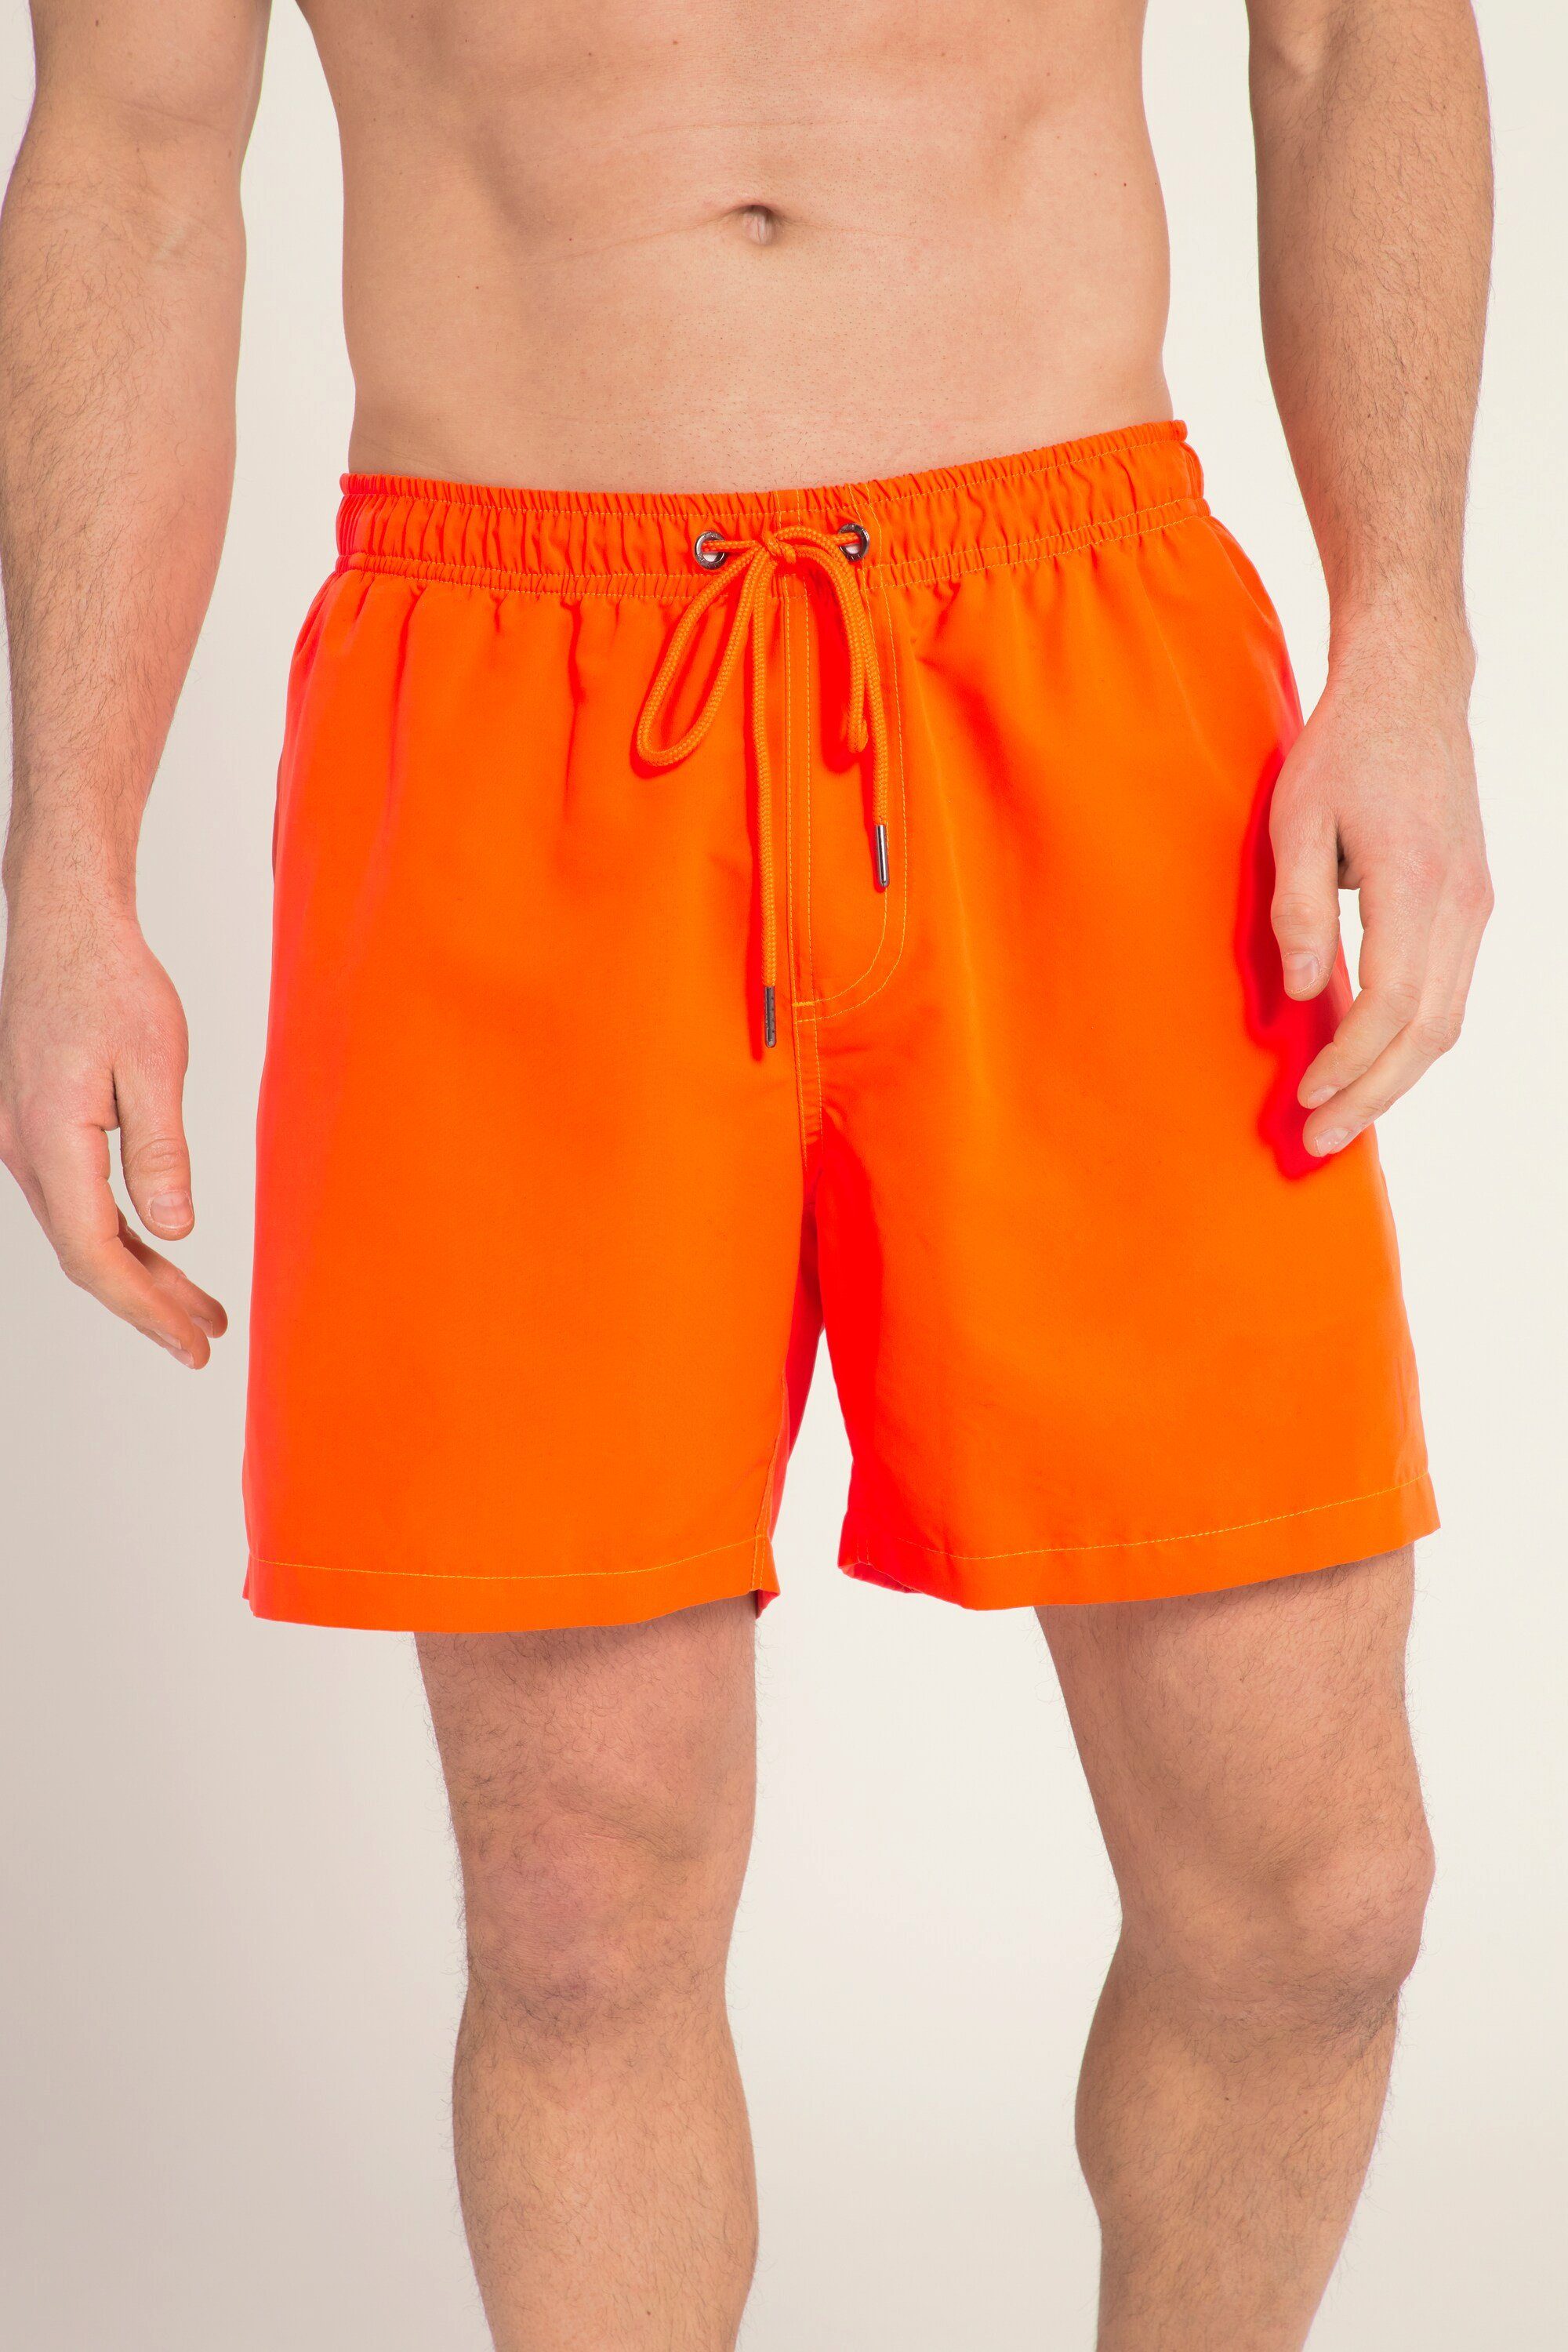 JP1880 Badehose Badeshorts Beachwear Elastikbund Zipptasche neon orange